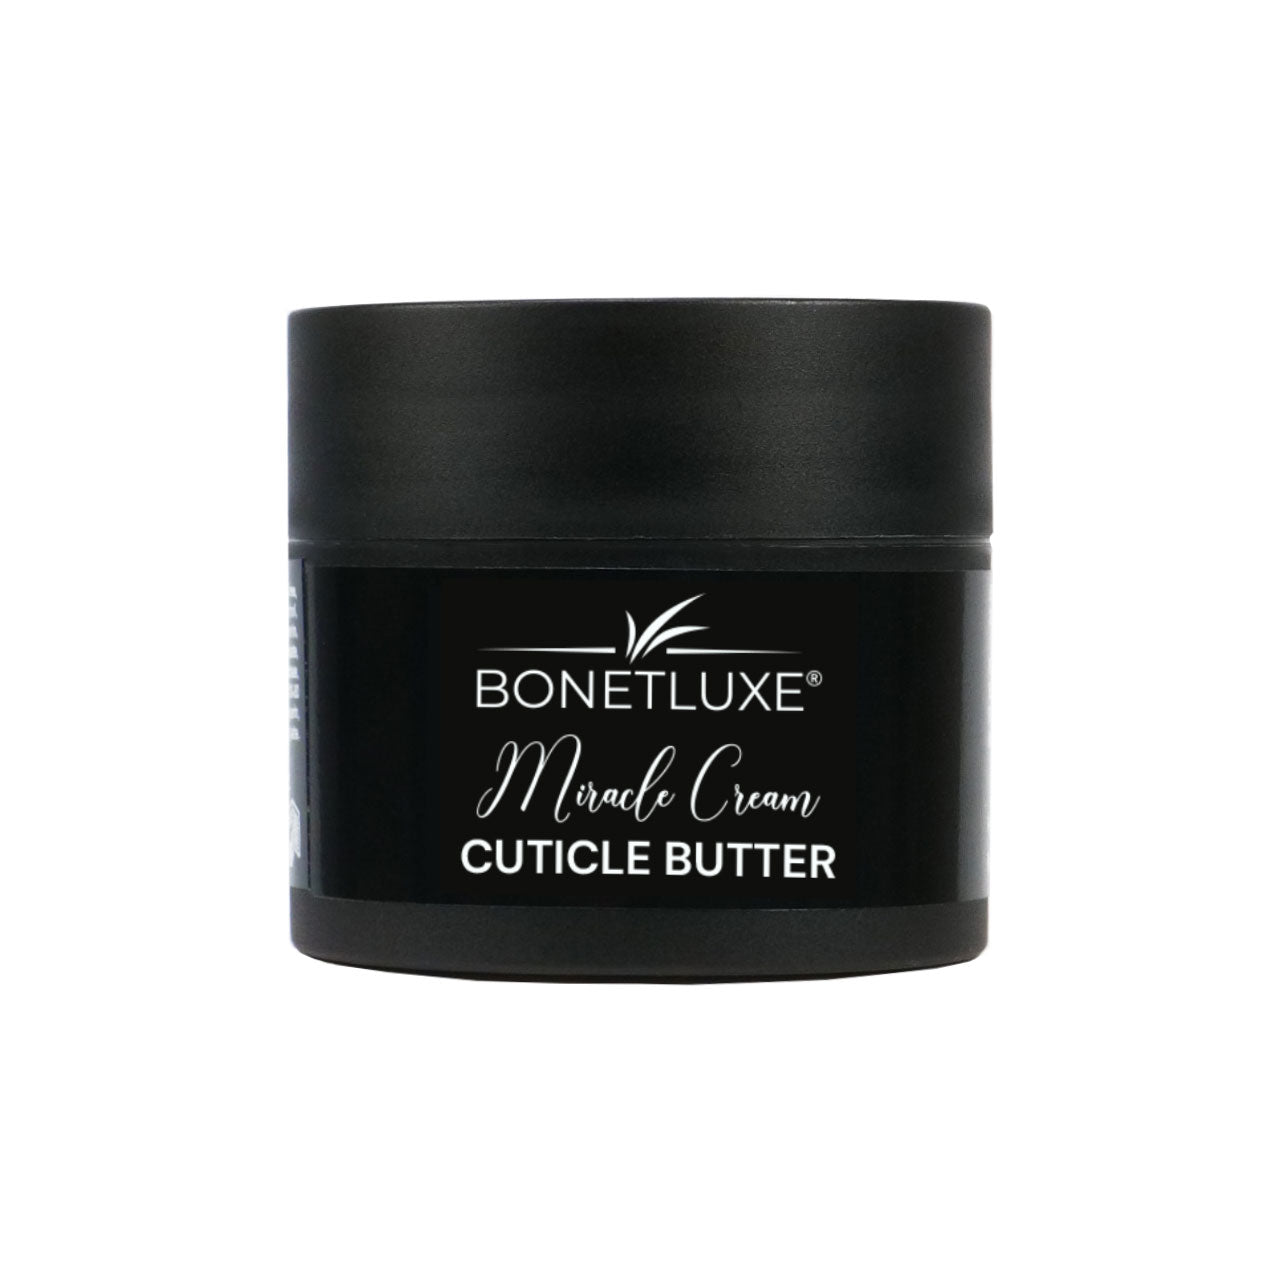 Bonetluxe Miracle Cream Cuticle Butter